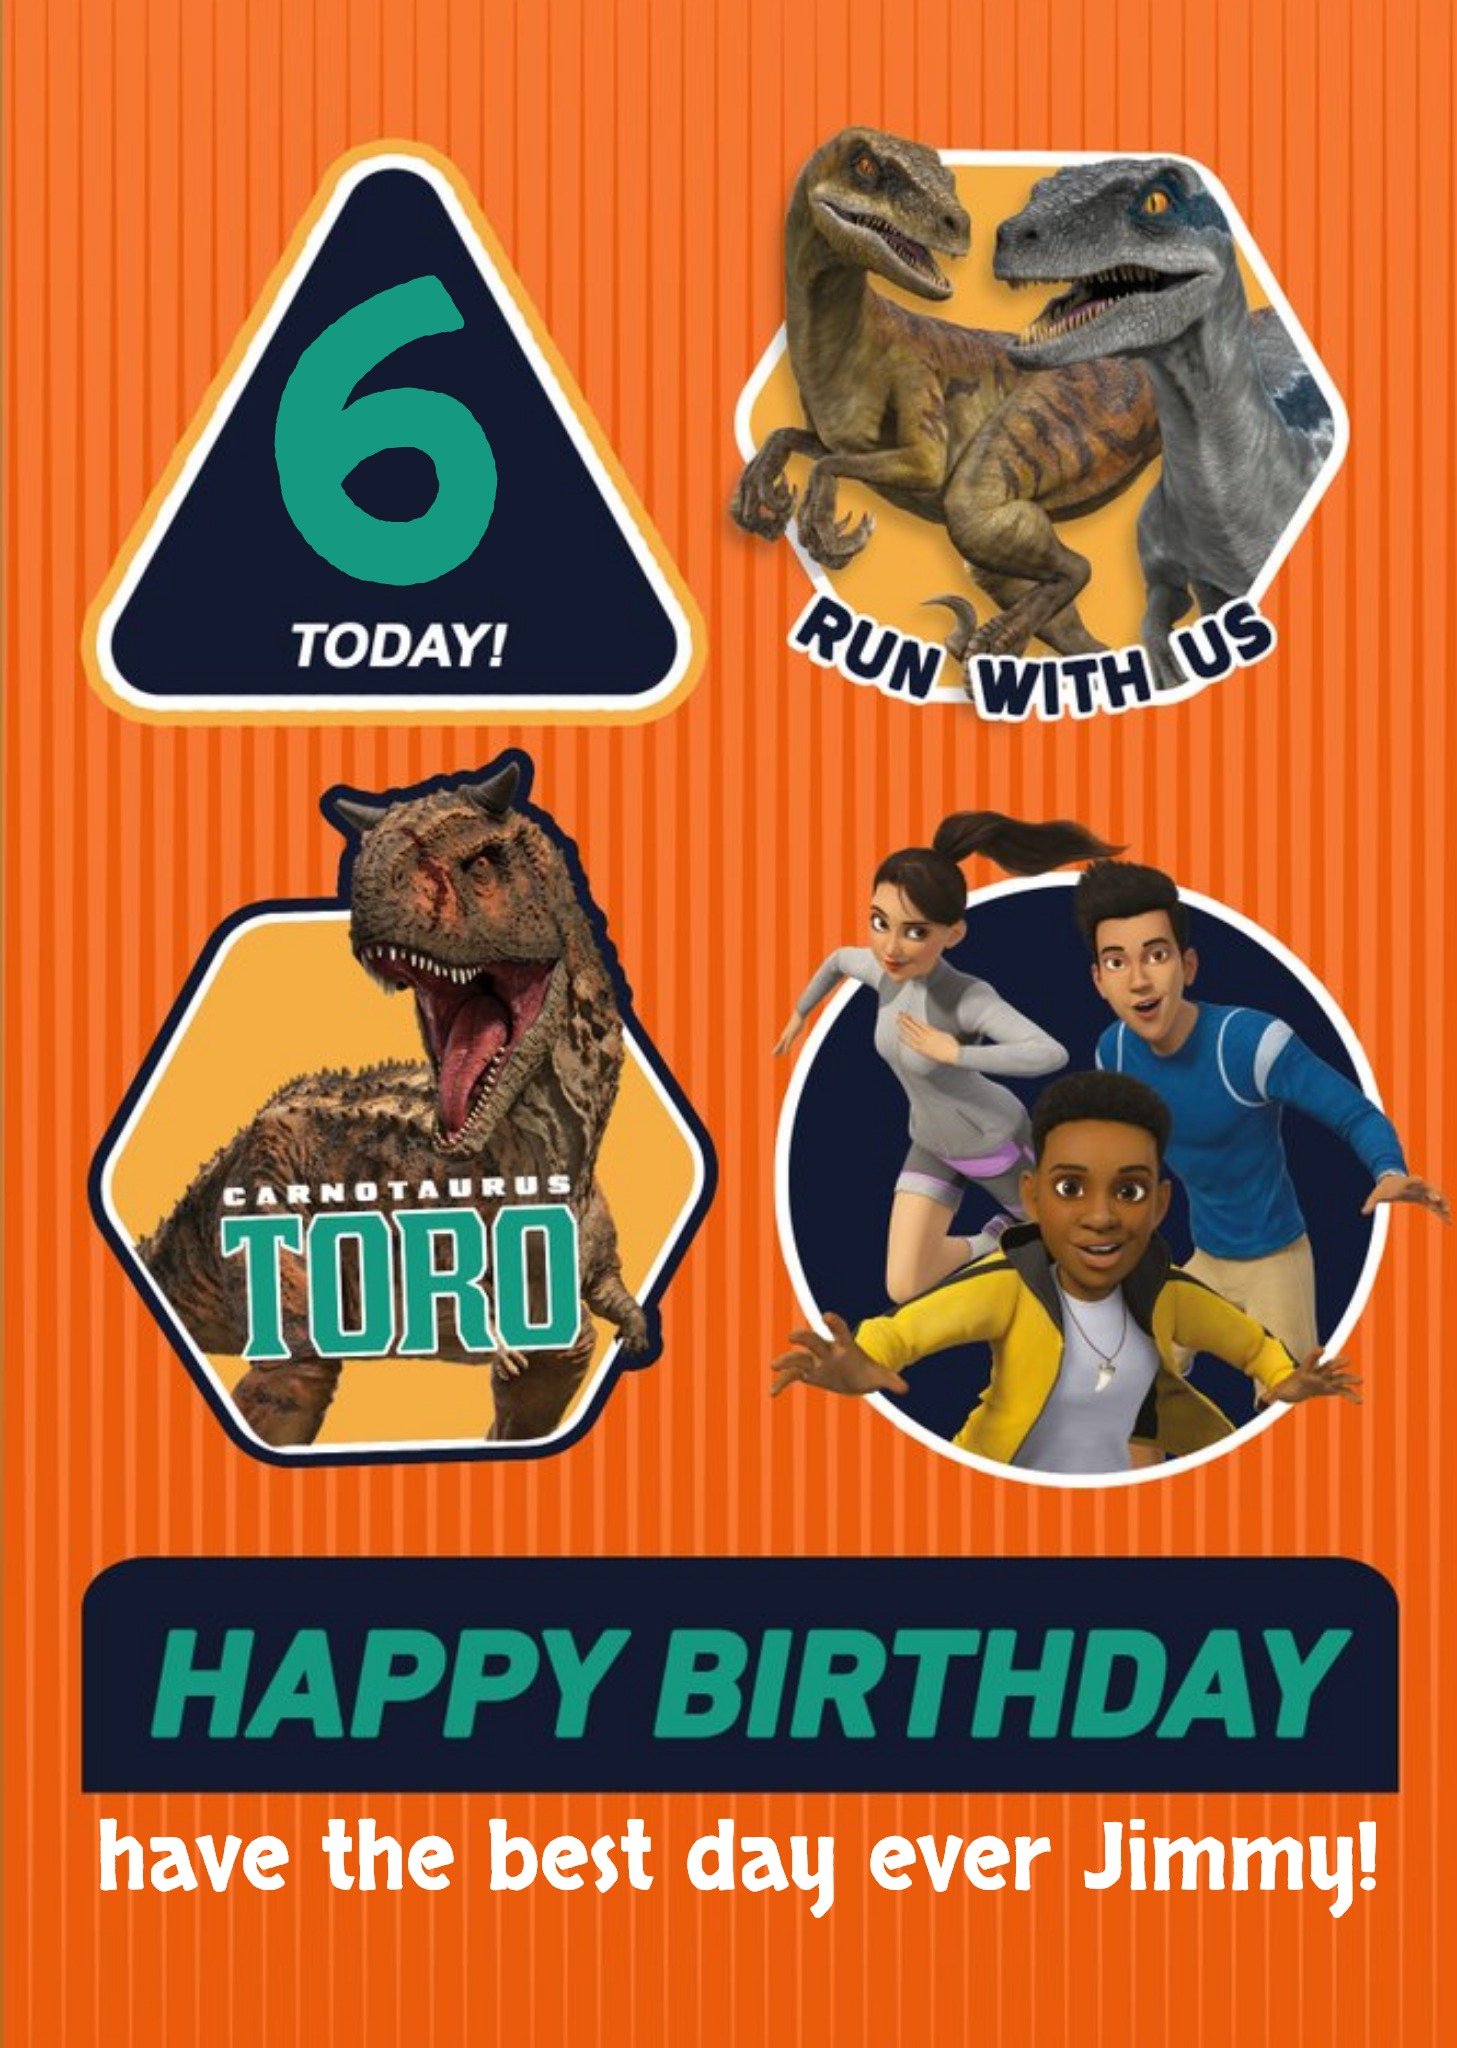 Jurassic World Jurassic Camp Cretaceous Dinosaur Run With Us Birthday Card, Large